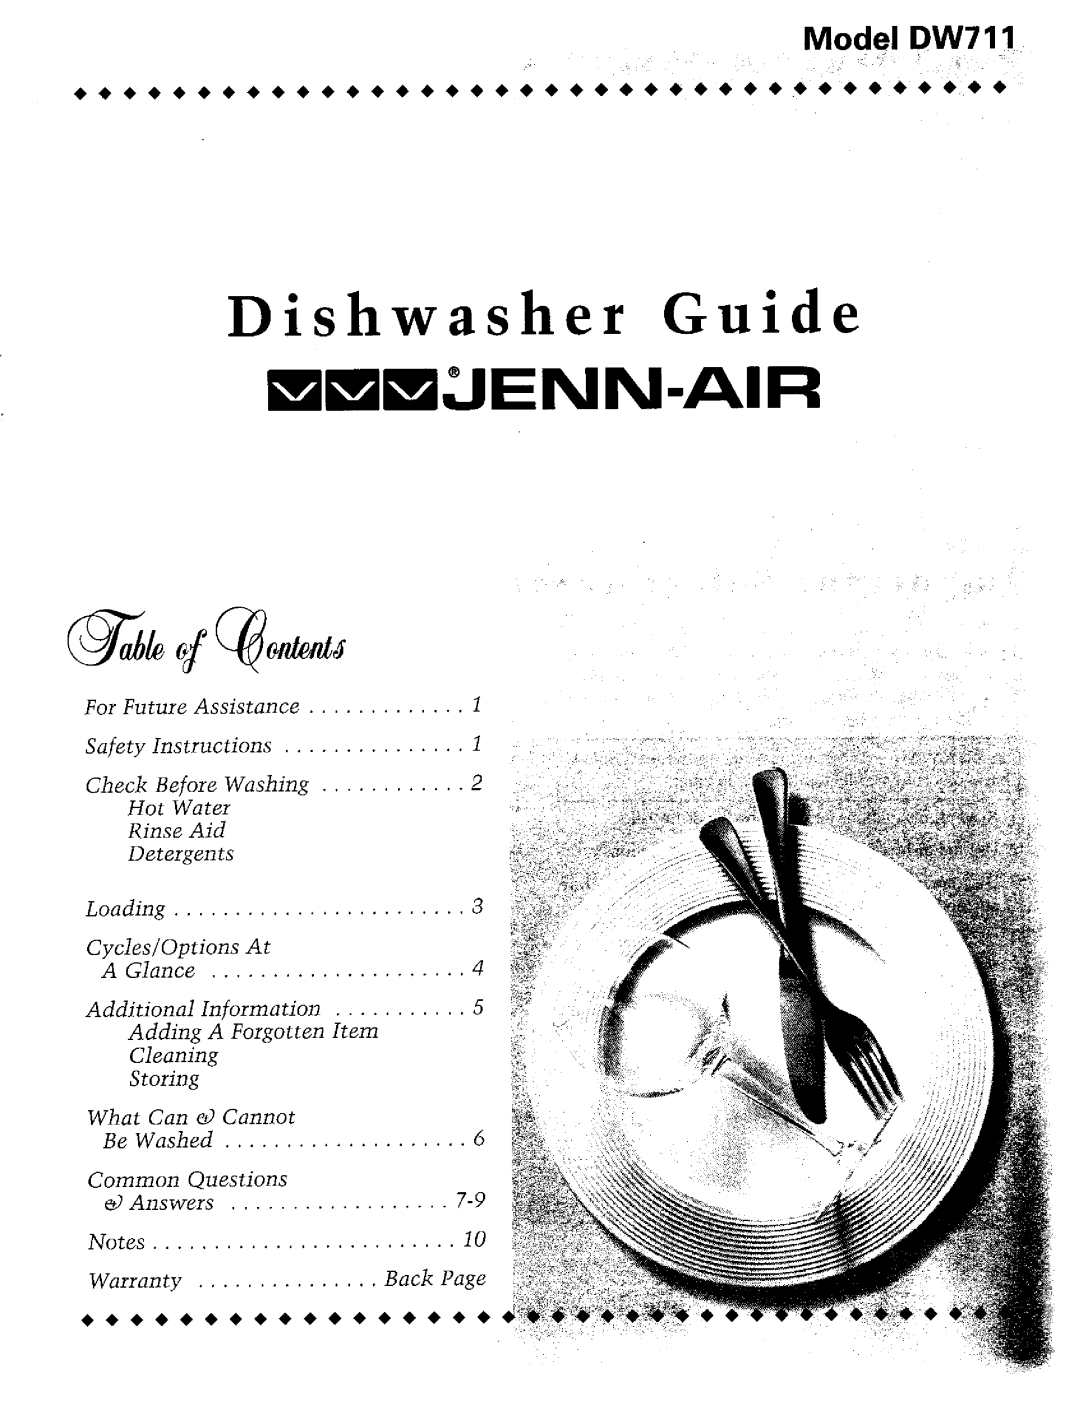 Jenn-Air warranty Dishwasher Guide, mBmLIENN-AIR, Model DW711 